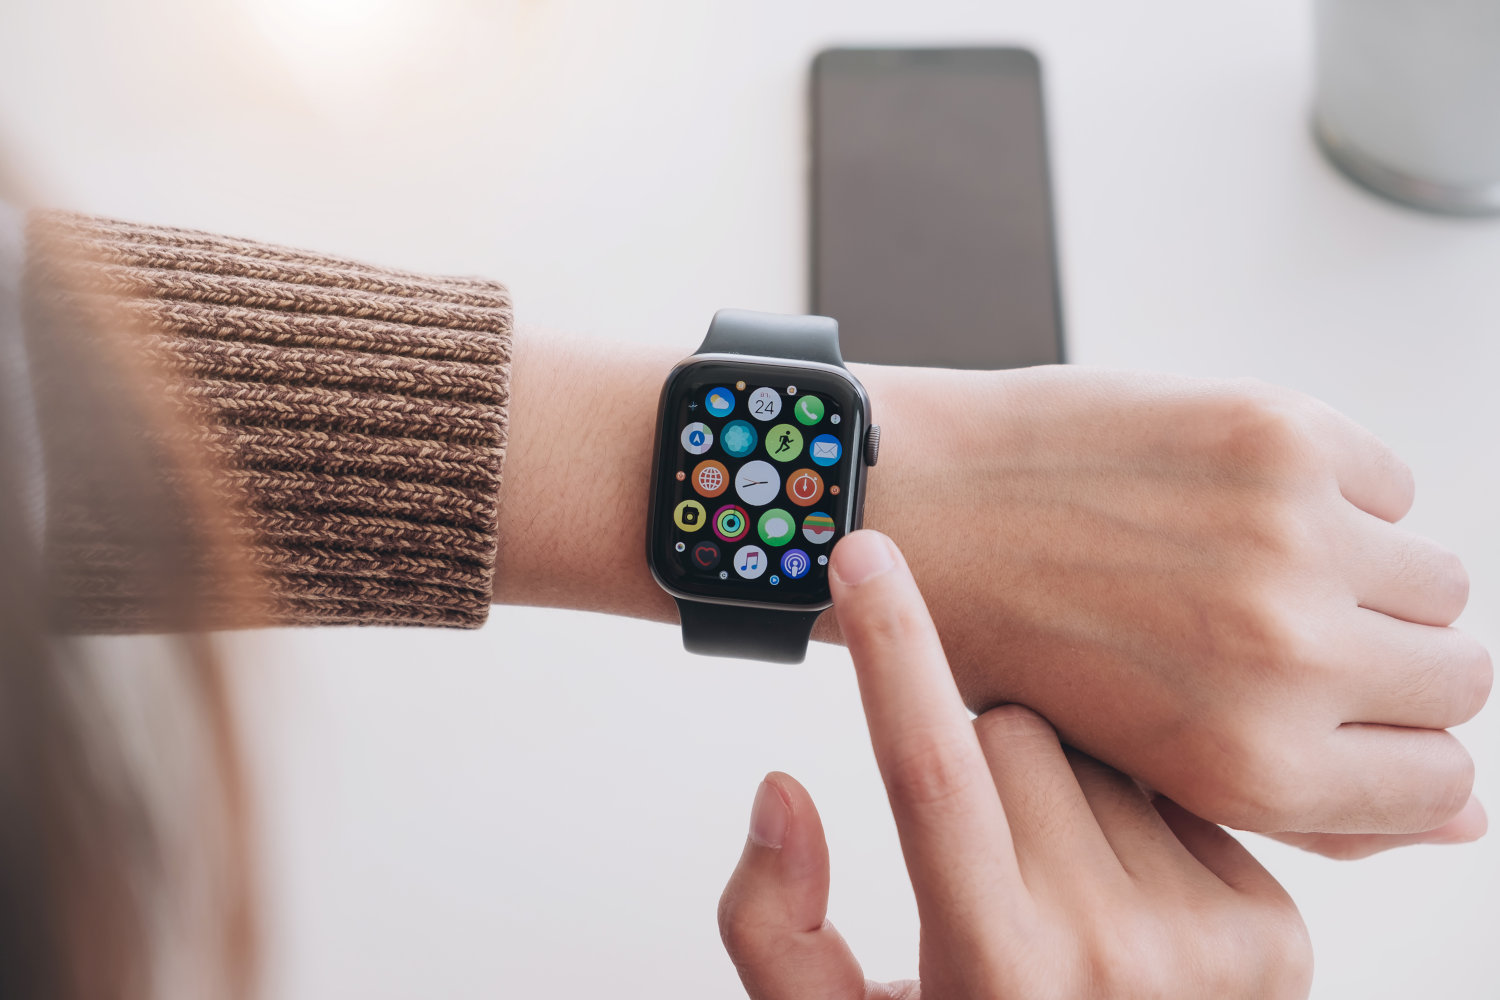 Dissociare l'Apple Watch dall'iPhone o dall'account Apple in pochi minuti